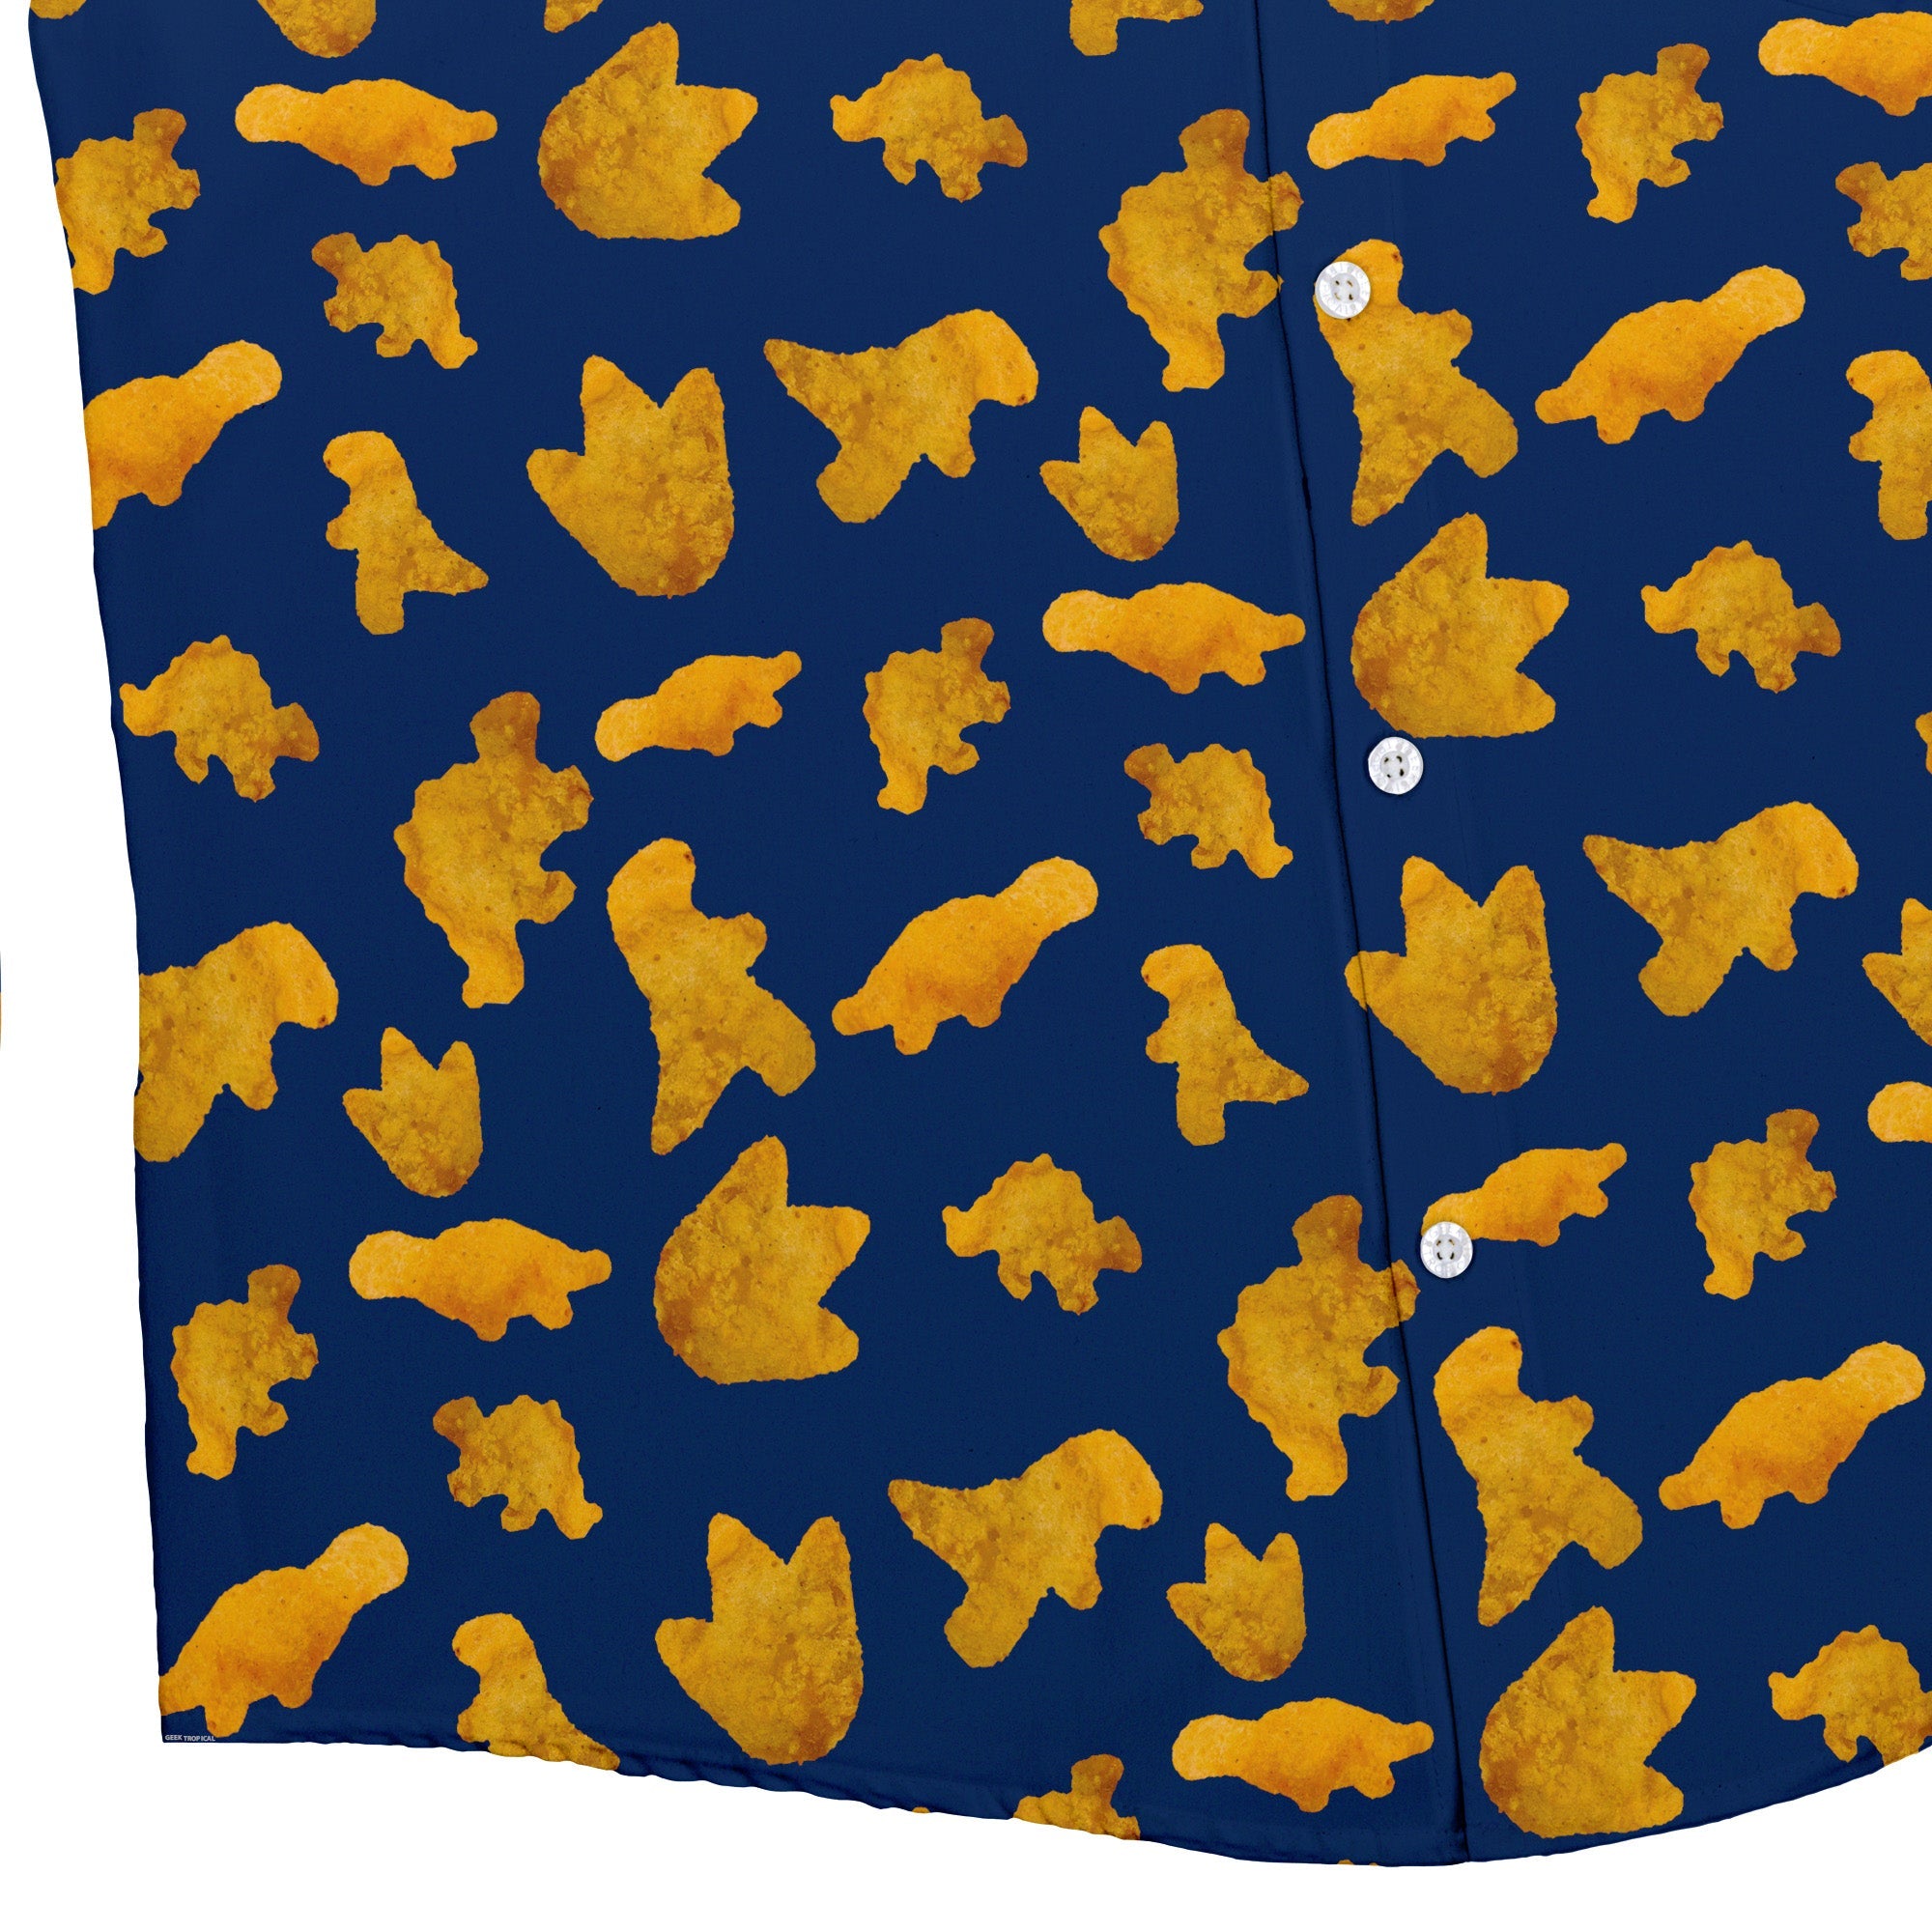 Dinosaur Chicken Nuggets Blue Button Up Shirt - adult sizing - Design by Random Galaxy - dinosaur print